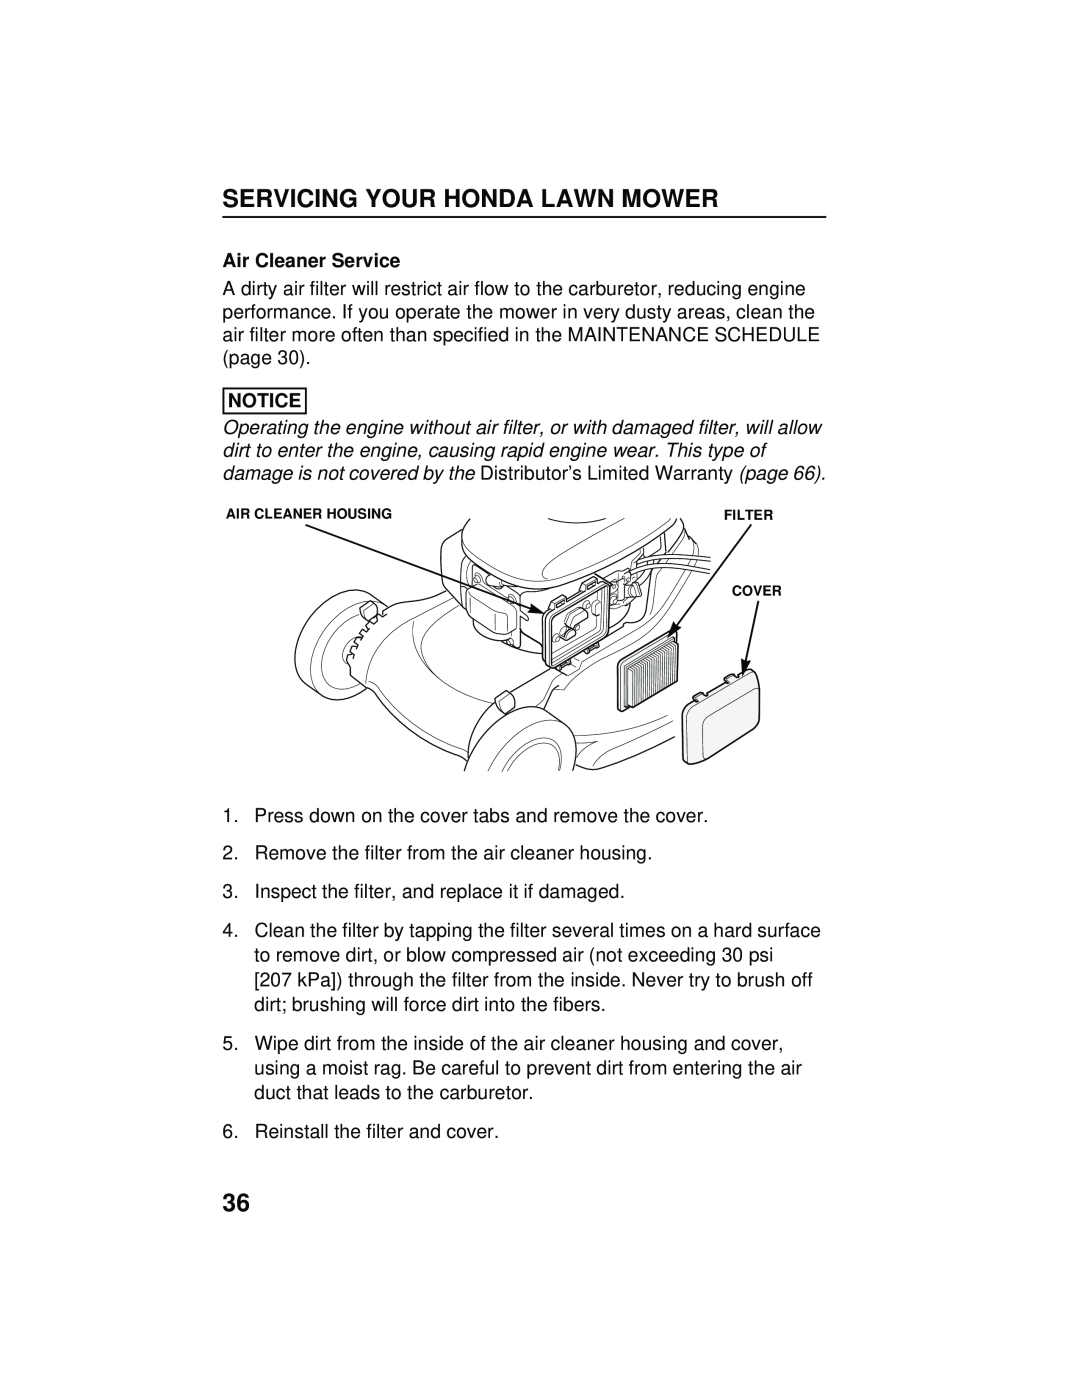 Honda Power Equipment HRB216TXA owner manual Air Cleaner Service, Servicing Your Honda Lawn Mower 